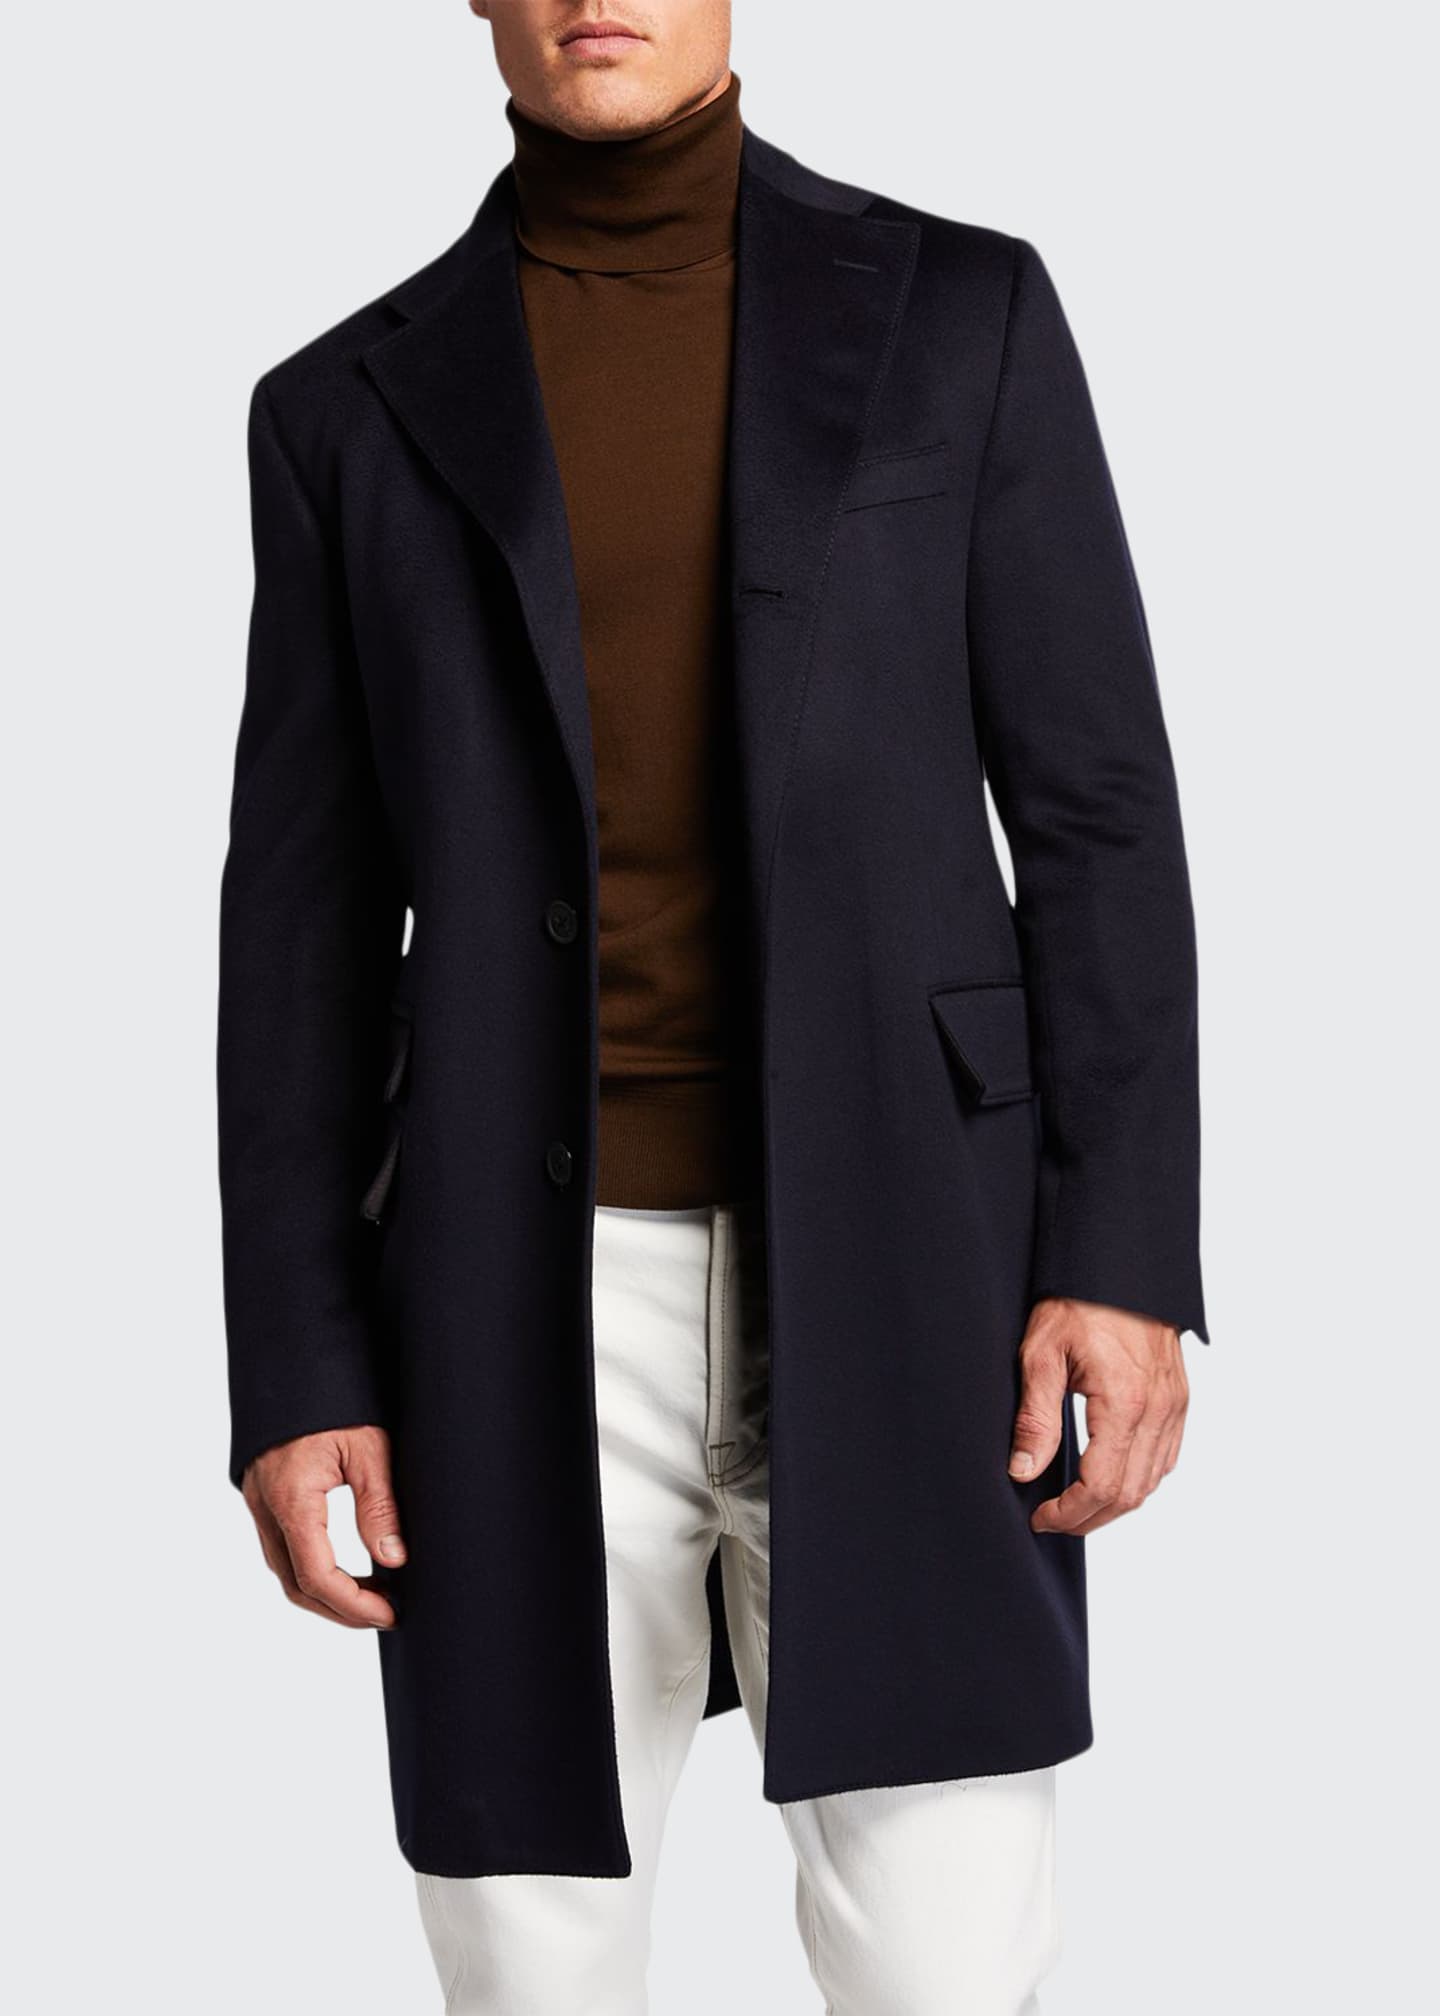 Corneliani Men's Solid ID Topcoat w/ Bib - Bergdorf Goodman